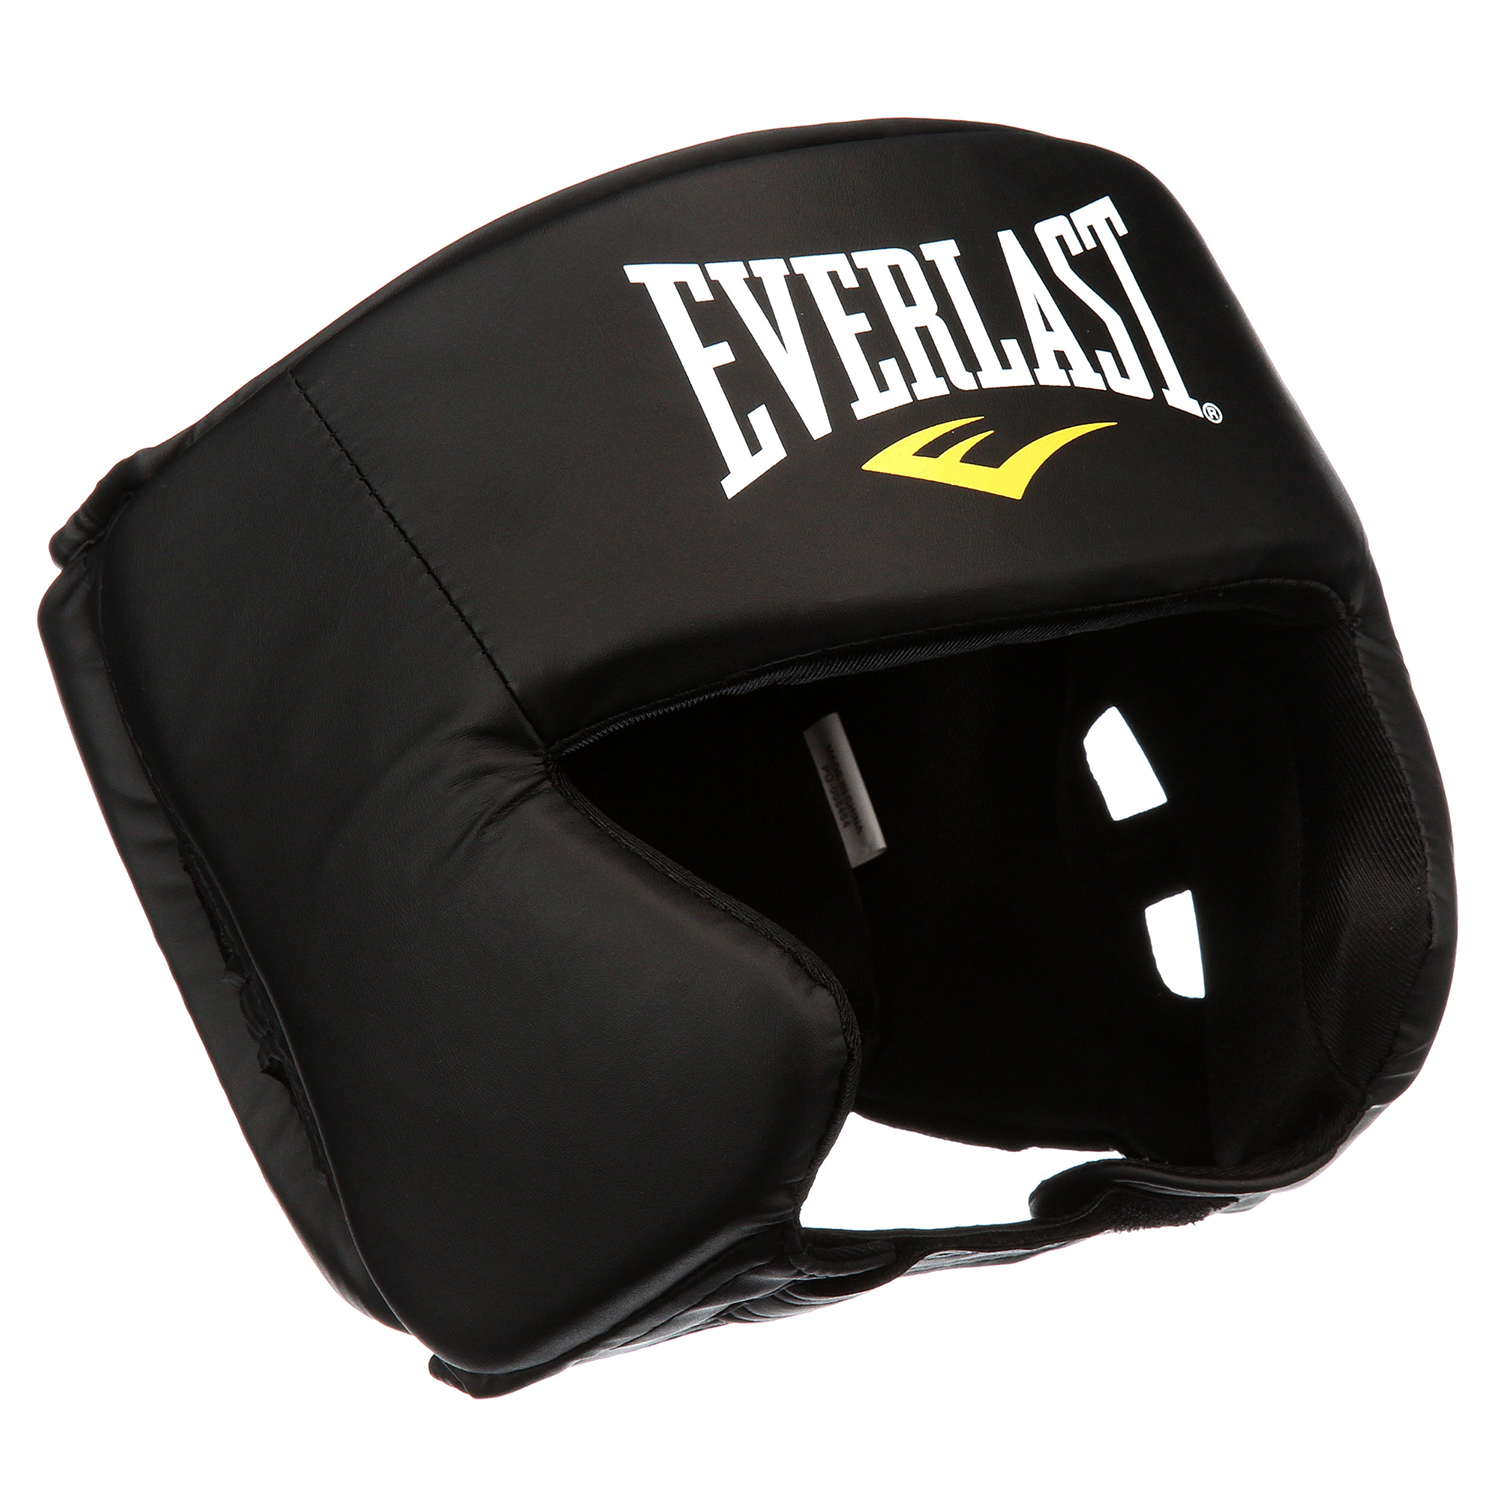 Everlast Everfresh Boxing Protective Headgear - image 1 of 5